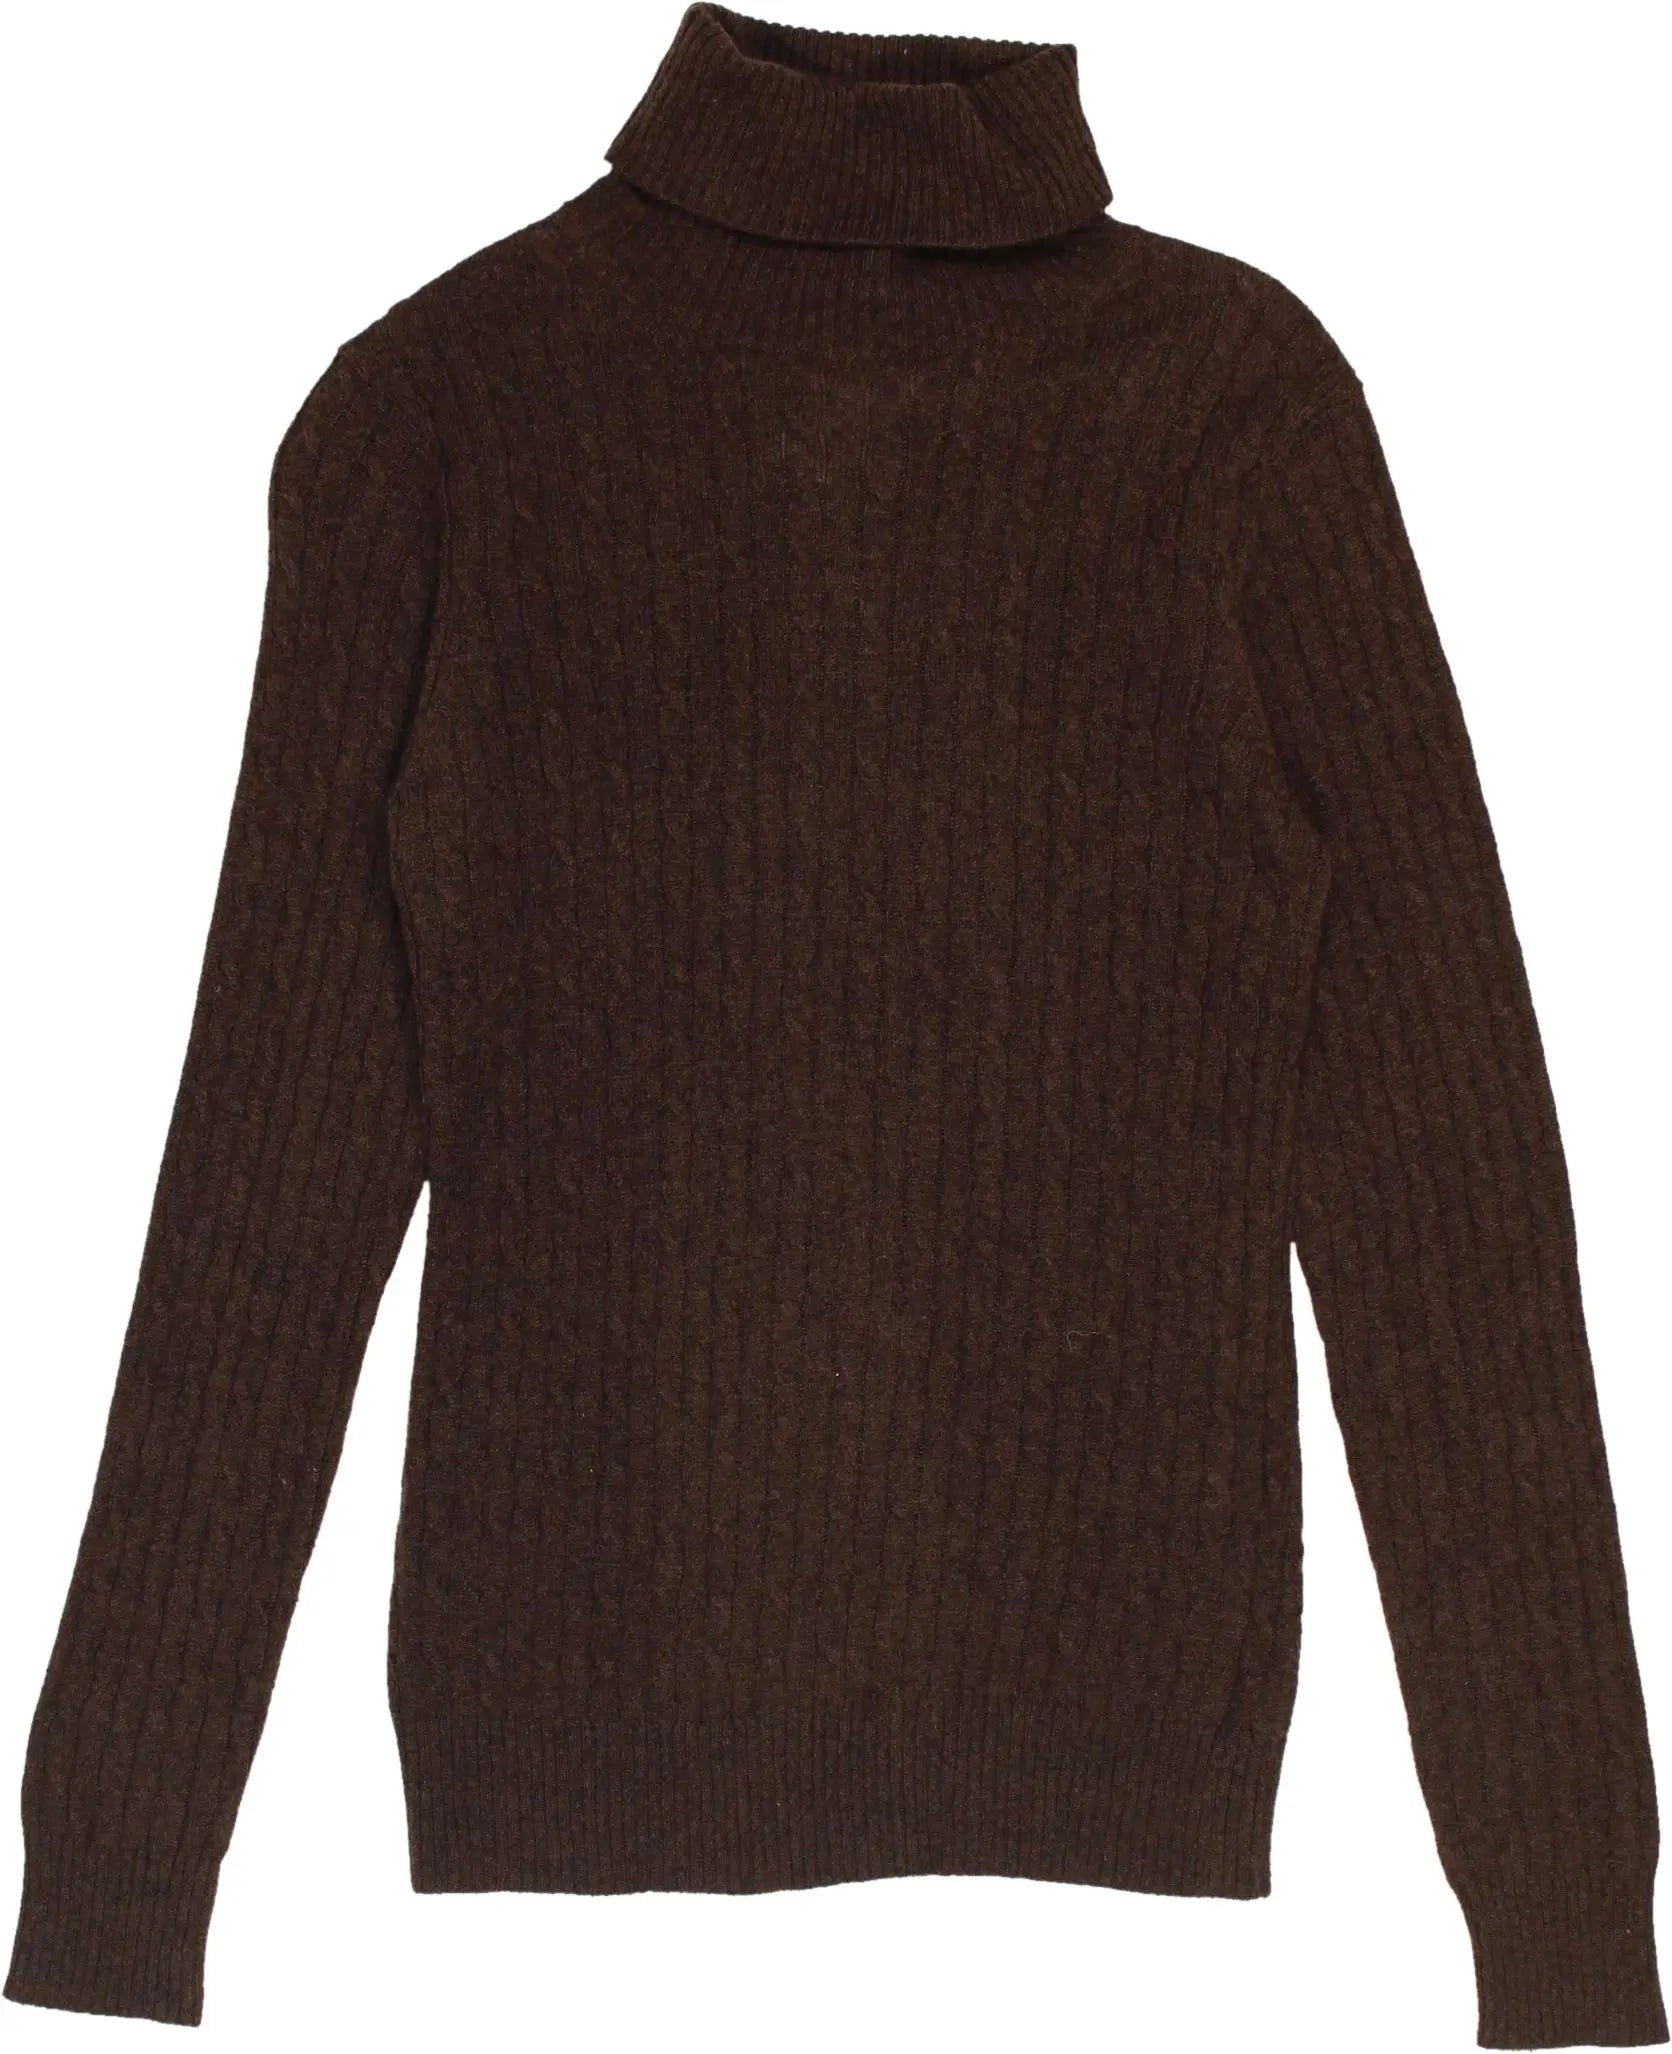 Tweeds - Brown turtleneck- ThriftTale.com - Vintage and second handclothing